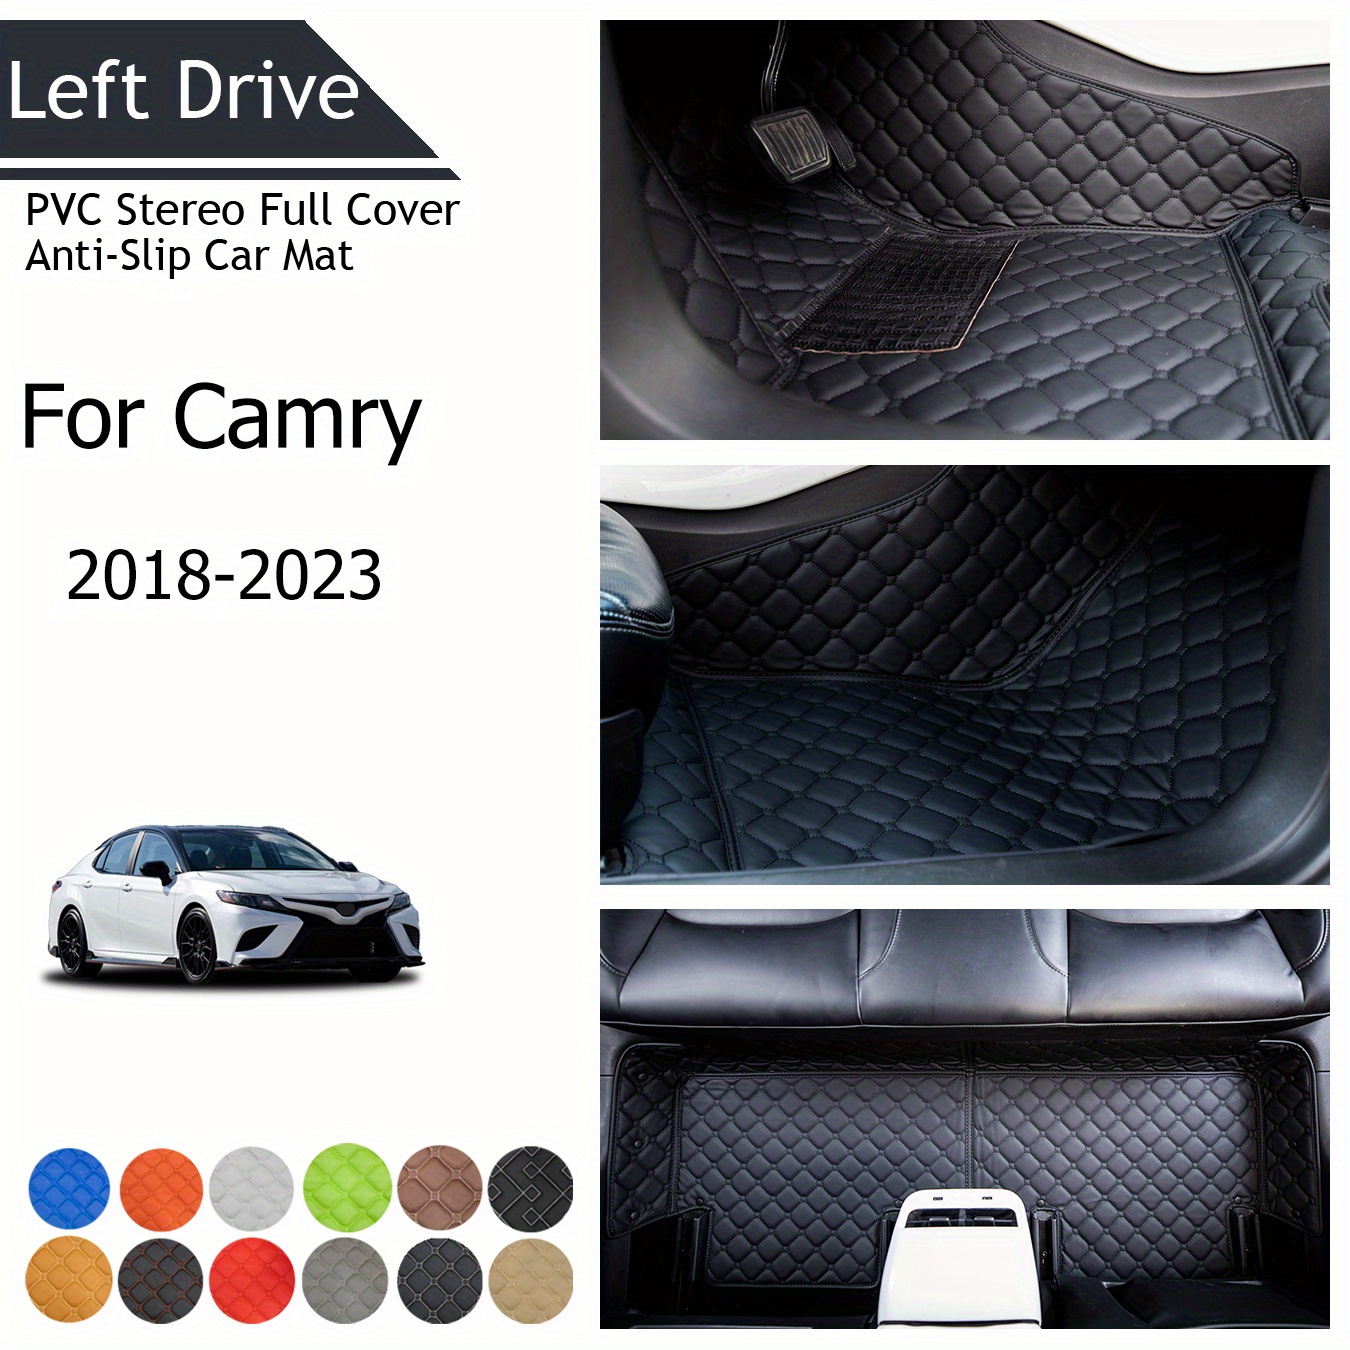 

Tegart [lhd] For Camry 2018-2023 3 Layer Pvc Stereo Full Cover Anti-slip Car Mat